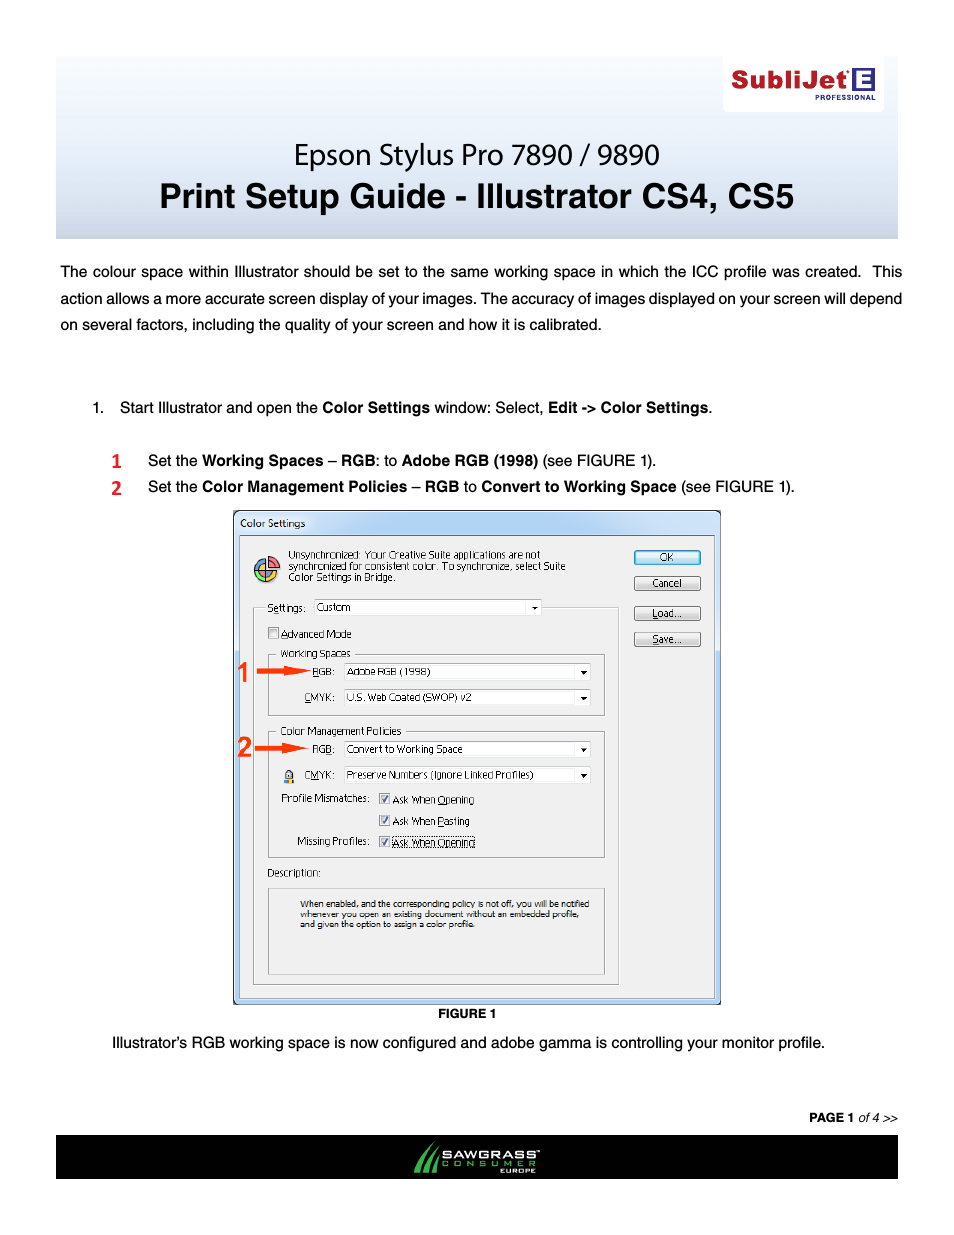 SubliJet E Epson Stylus Pro 7890 (Windows ICC Profile Setup): Print & Setup Guide Illustrator CS4 - CS5